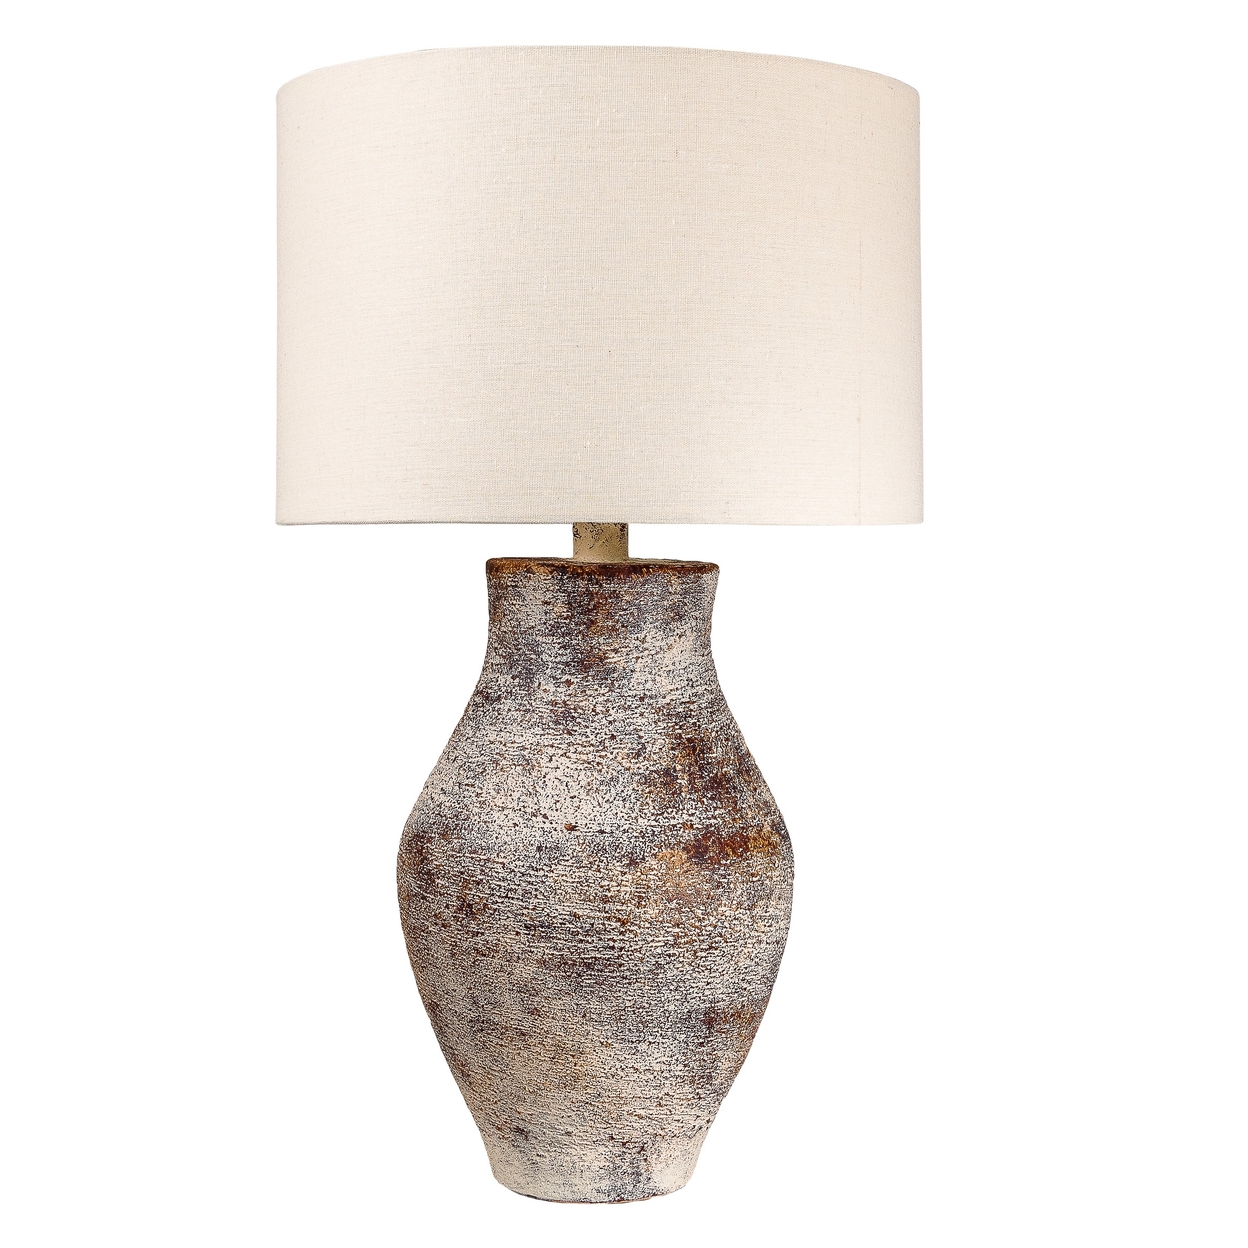 Gov 27 Inch Table Lamp, Beige Drum Shade, Vase Shaped Body, Painted Surface - Saltoro Sherpi